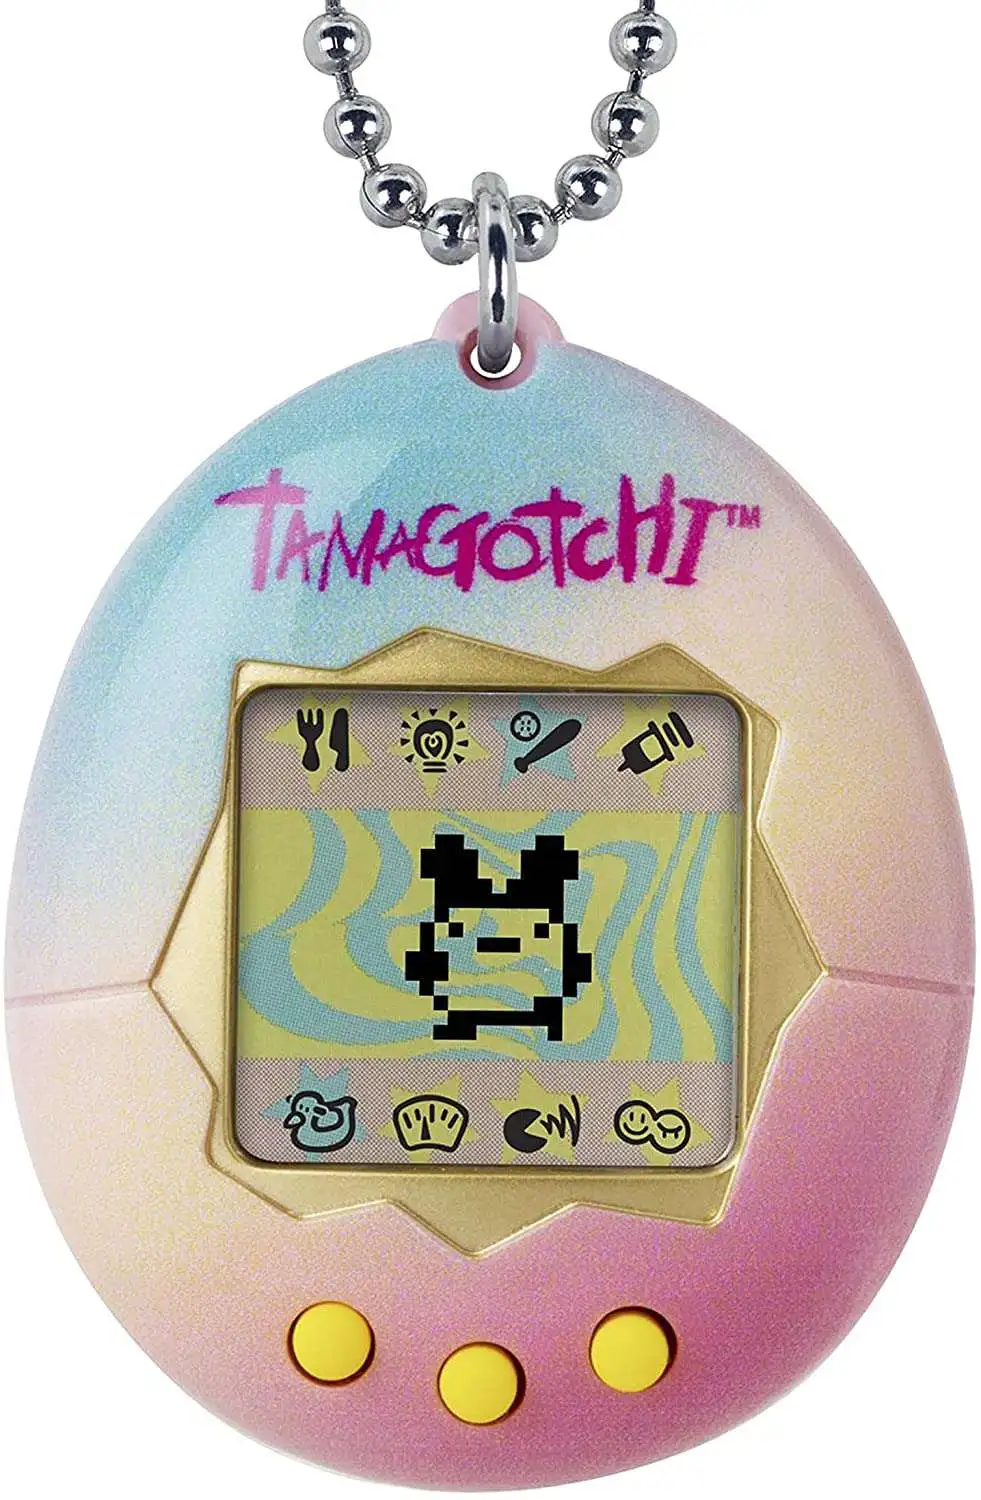 Tamagotchi 20th Anniversary Series #3 Pink & Yellow Interactive Digital Pet New 